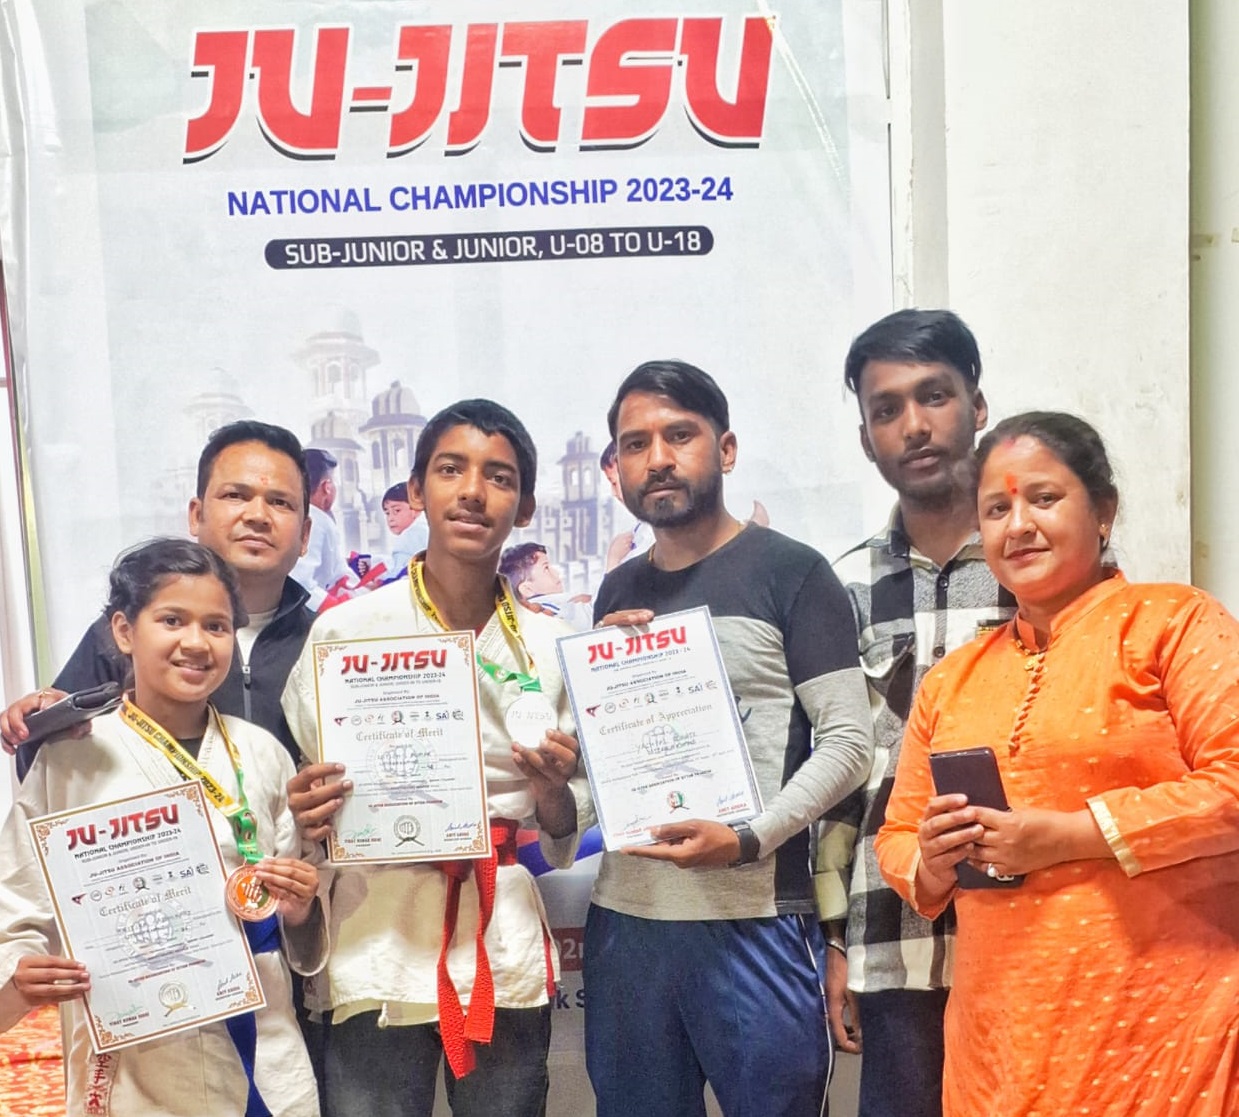 Almora Players Won Medals in Ju Jitsu Championship